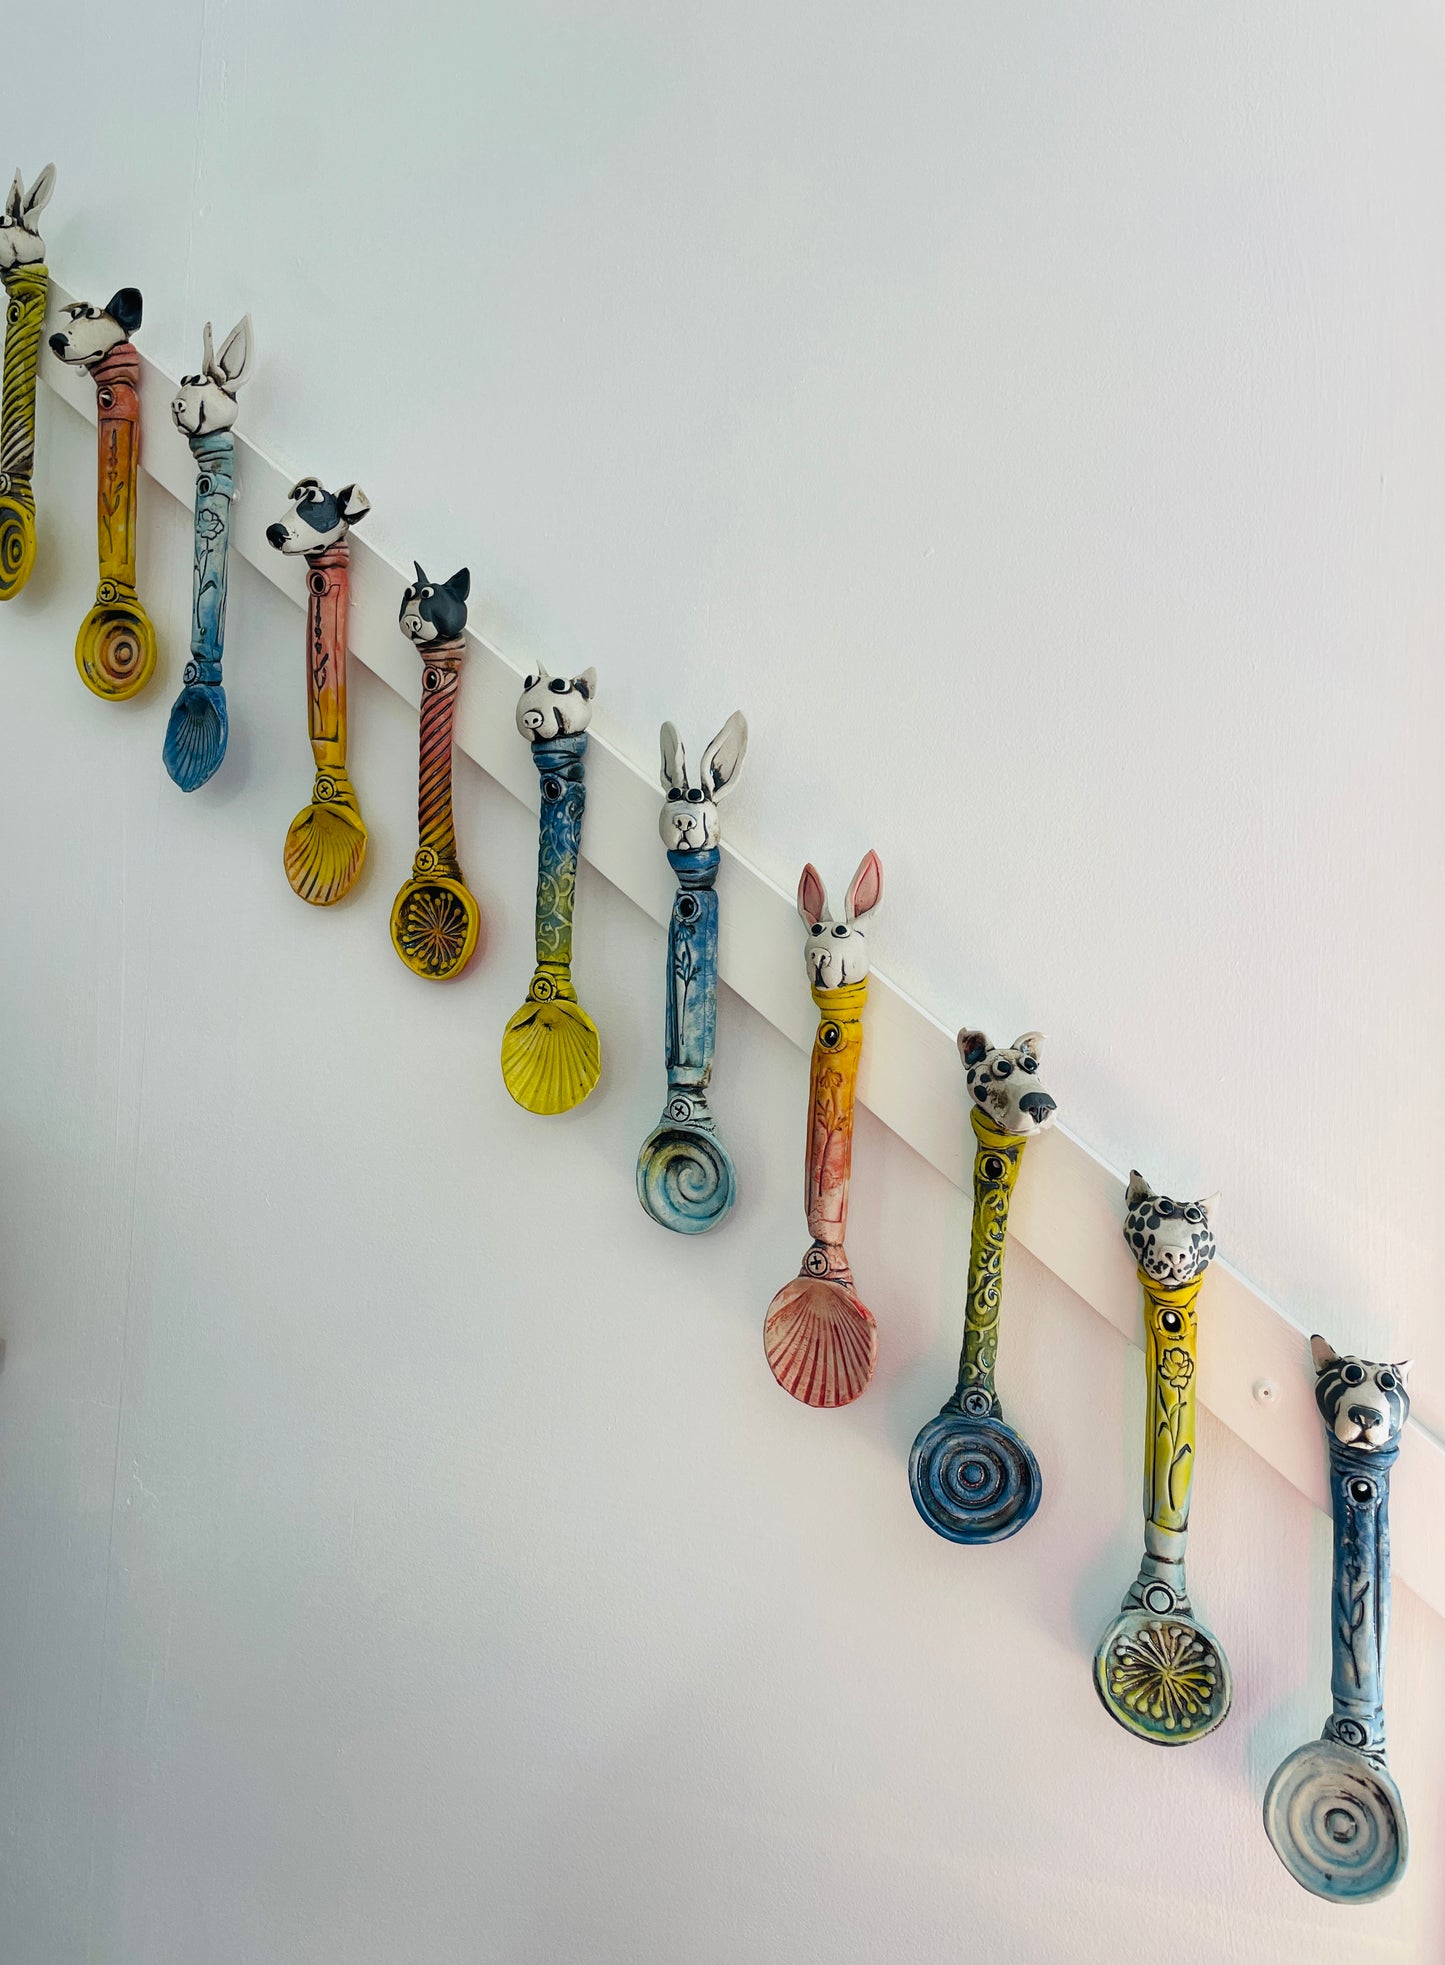 Fiona Tunnicliffe Decorative Spoon - yellow rabbit